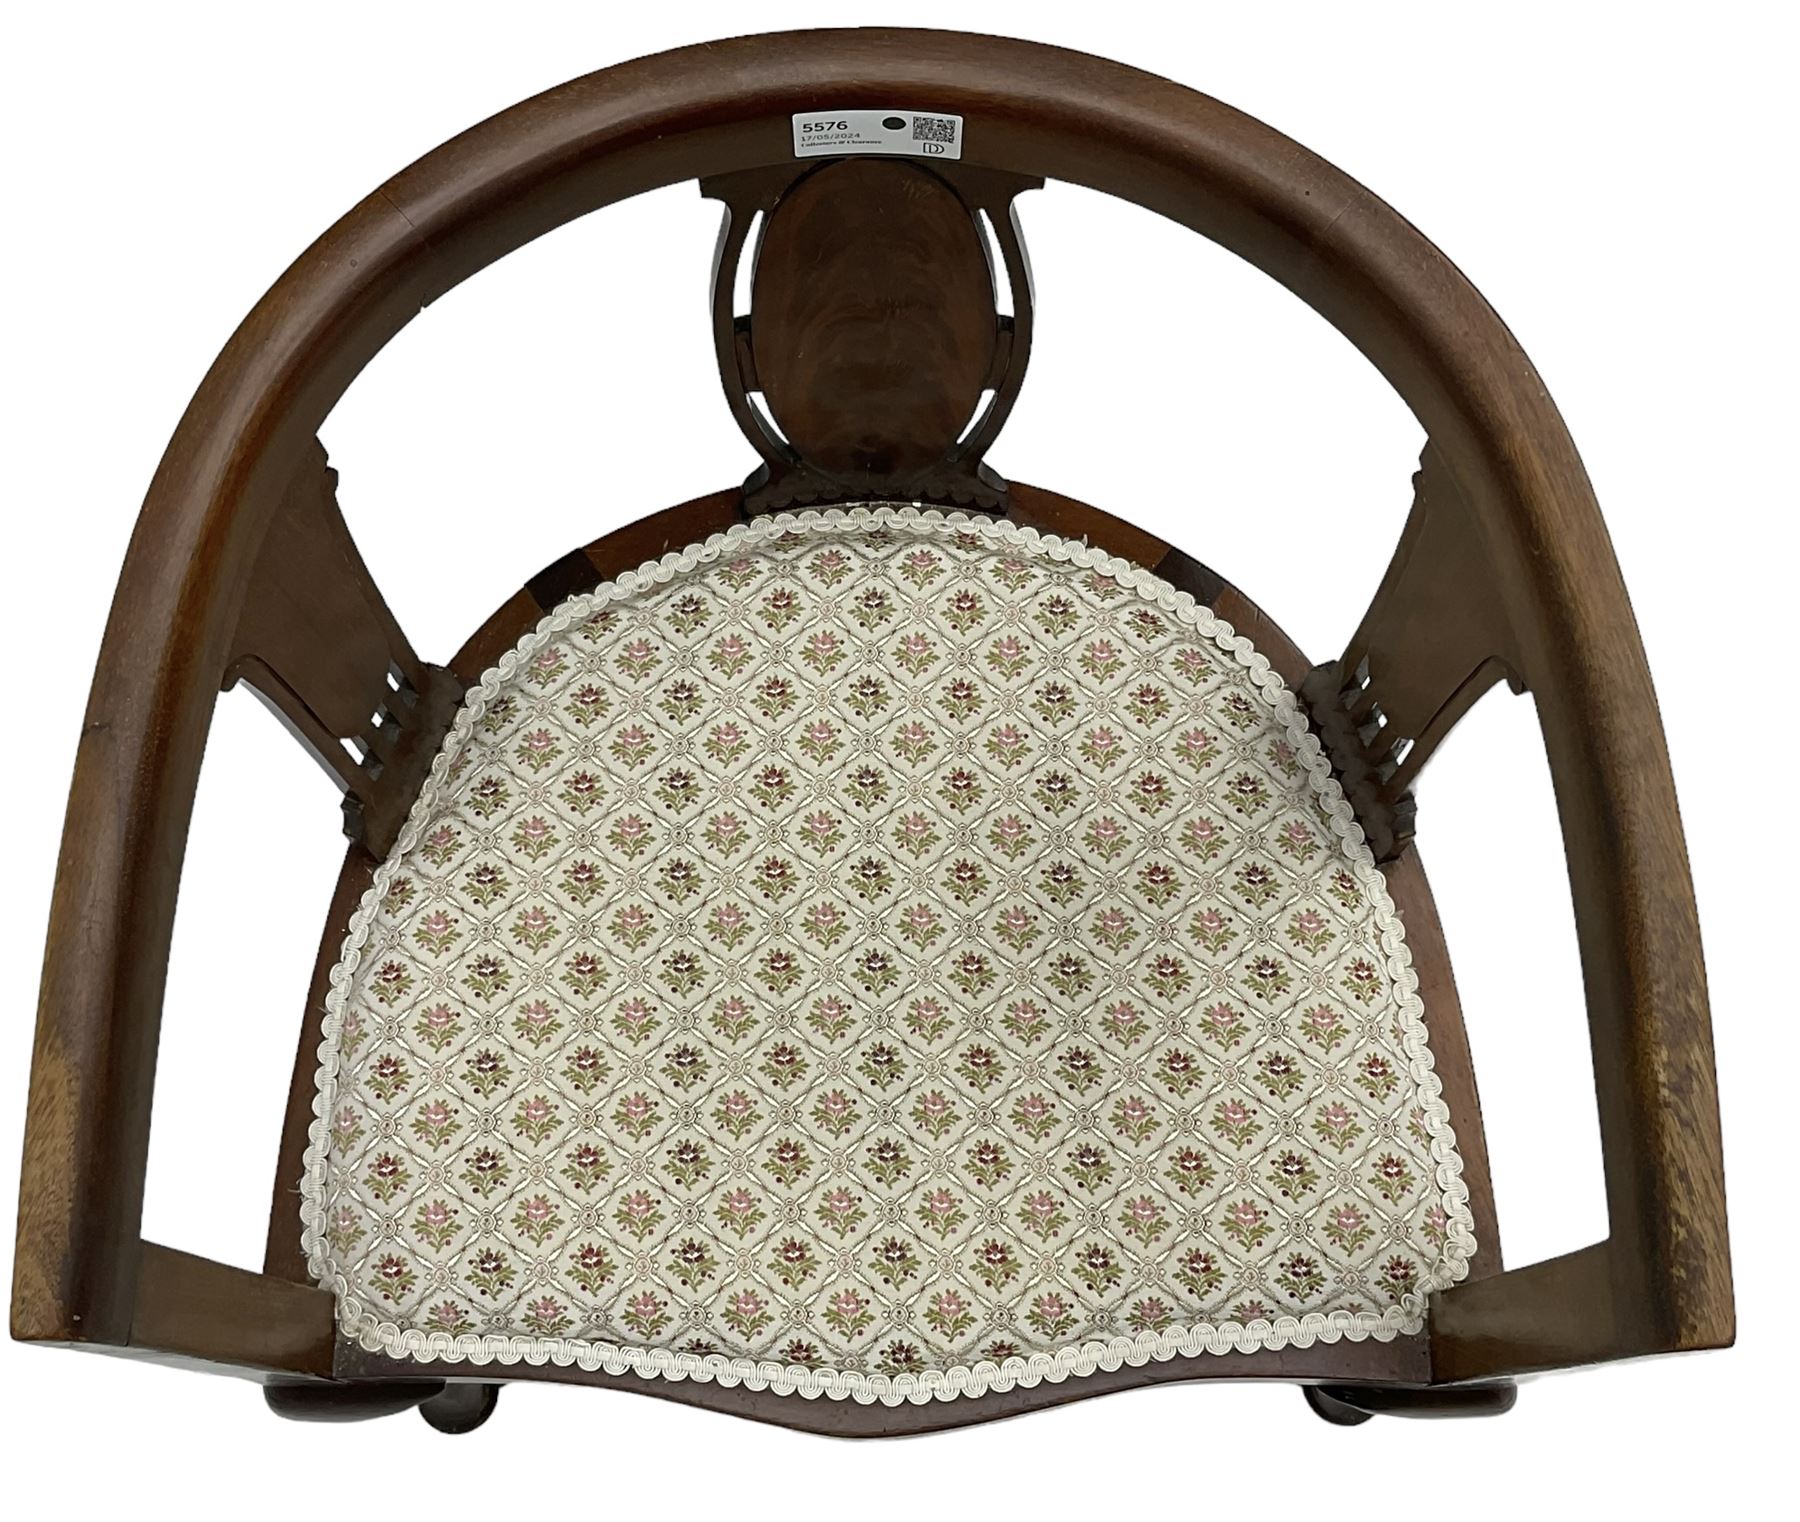 Early 20th century mahogany tub shaped chair - Image 5 of 5